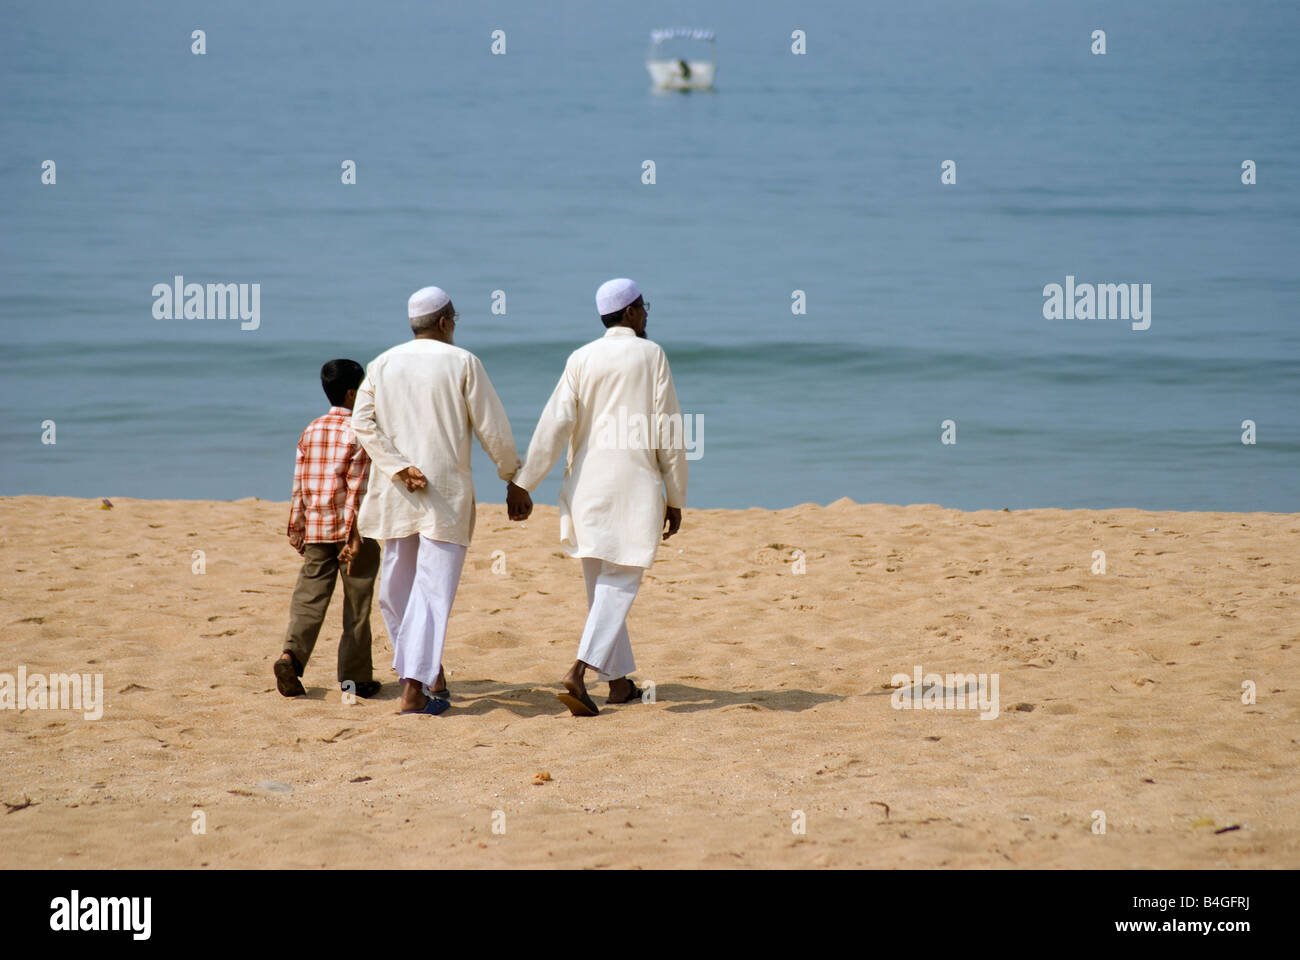 two-muslim-men-and-a-boy-walking-on-the-beach-holding-hands-B4GFRJ.jpg